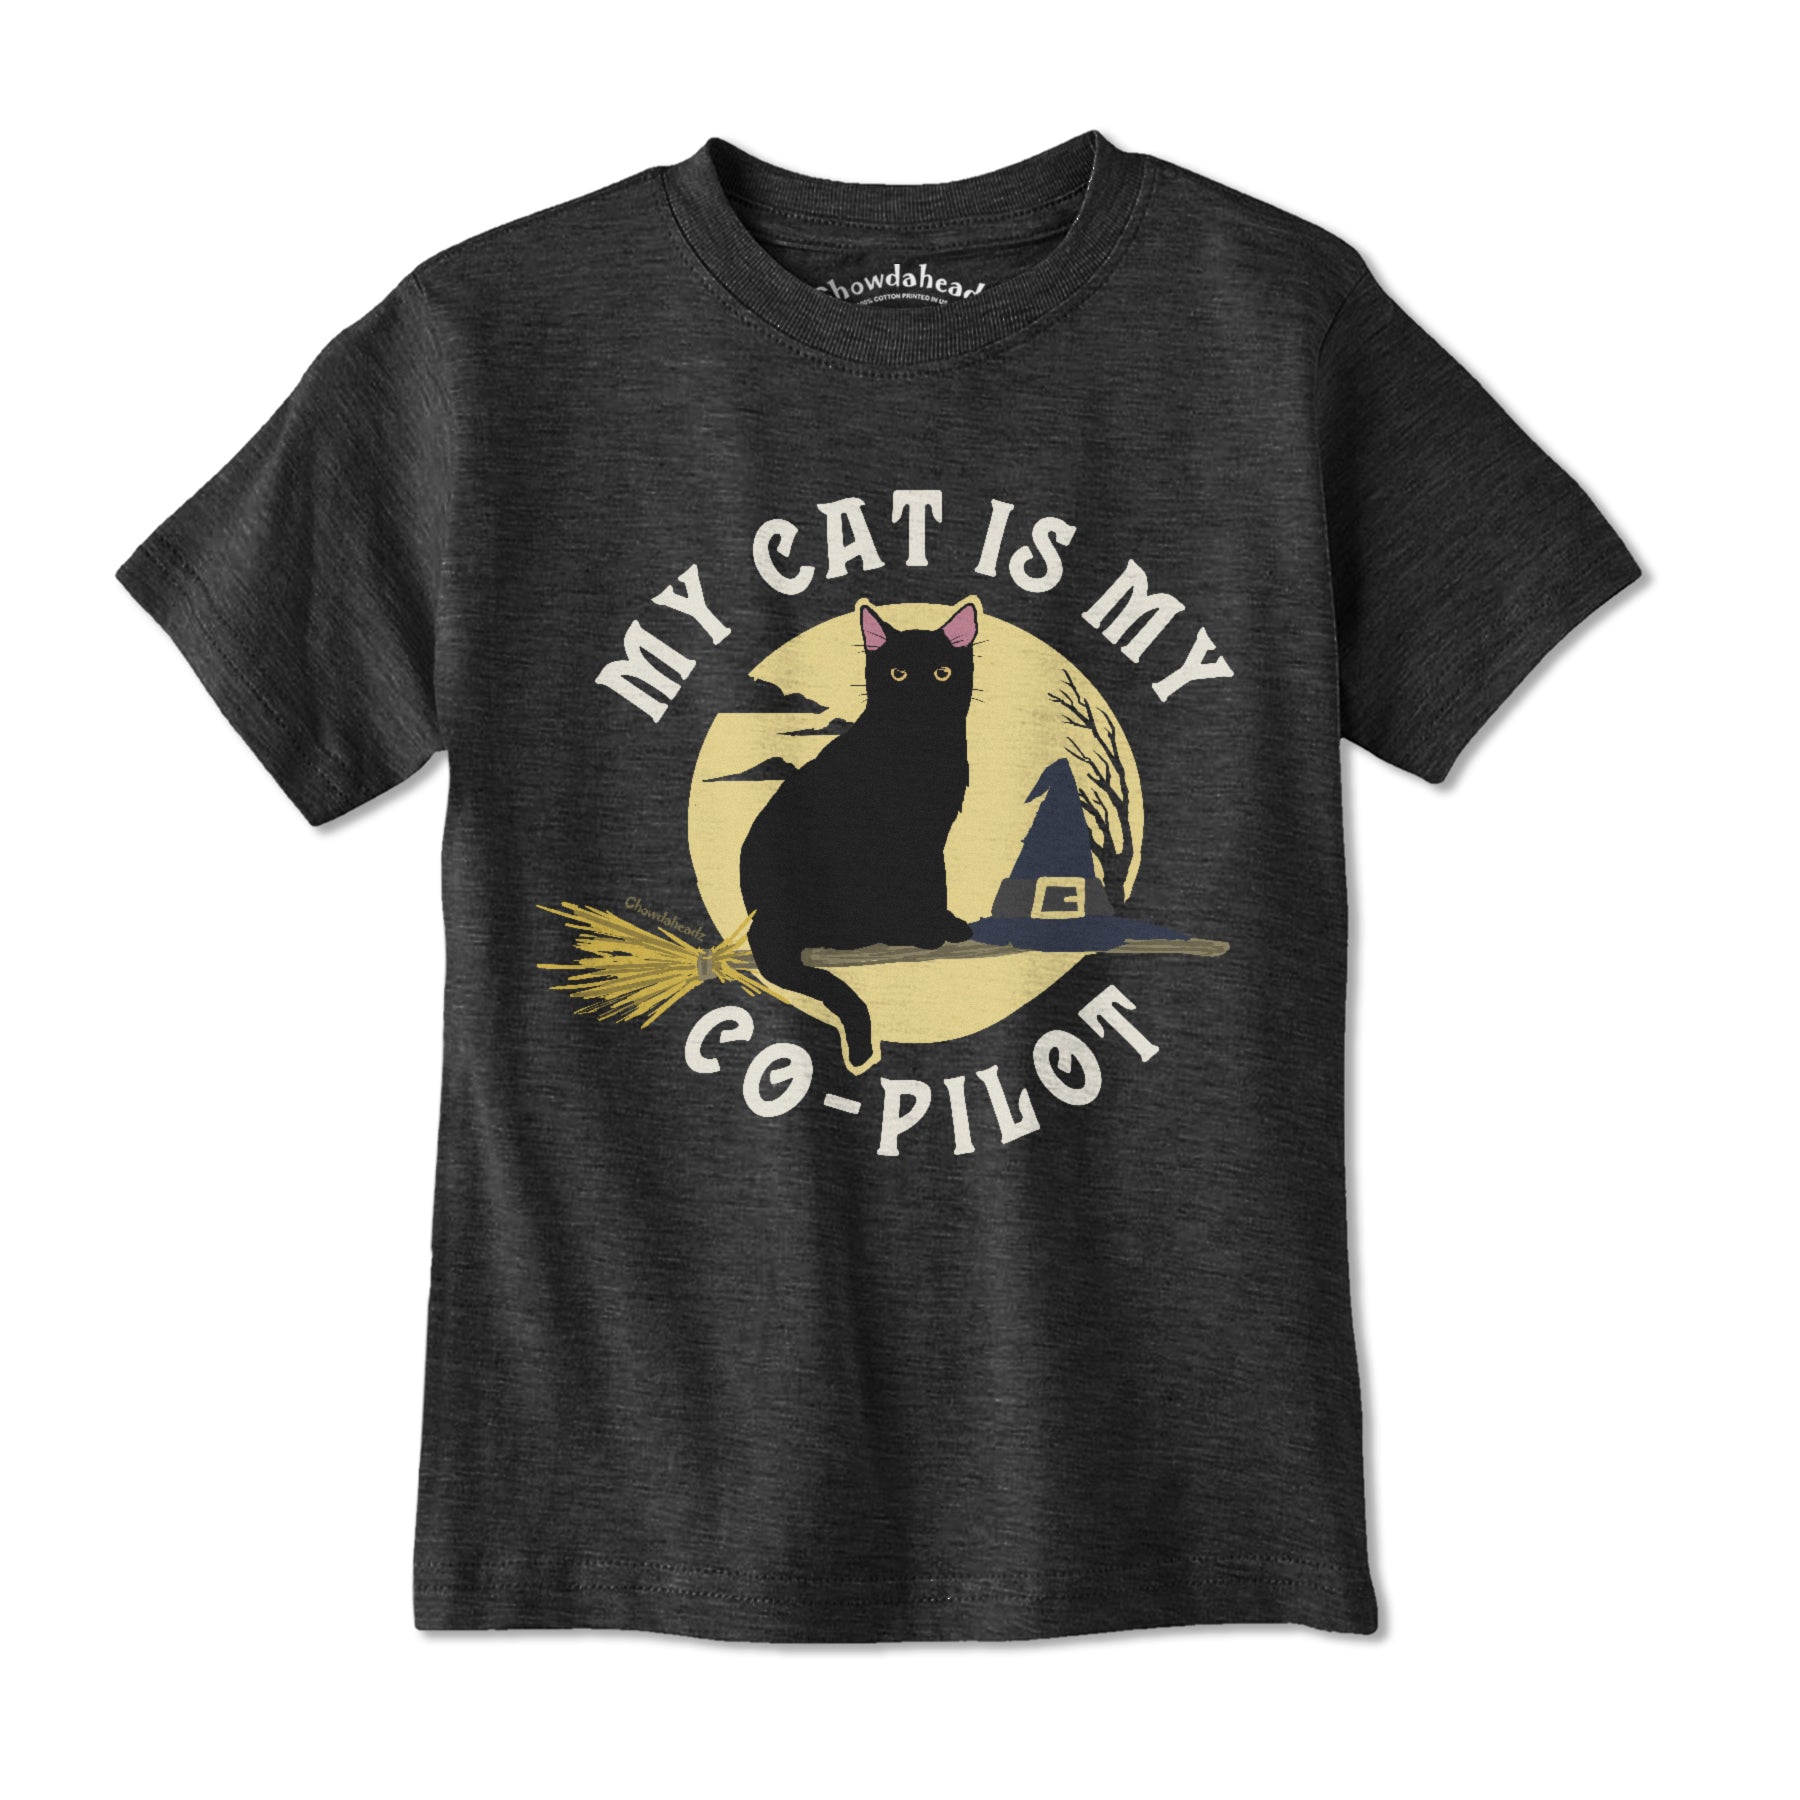 My Cat is My Co-pilot Youth T-Shirt - Chowdaheadz